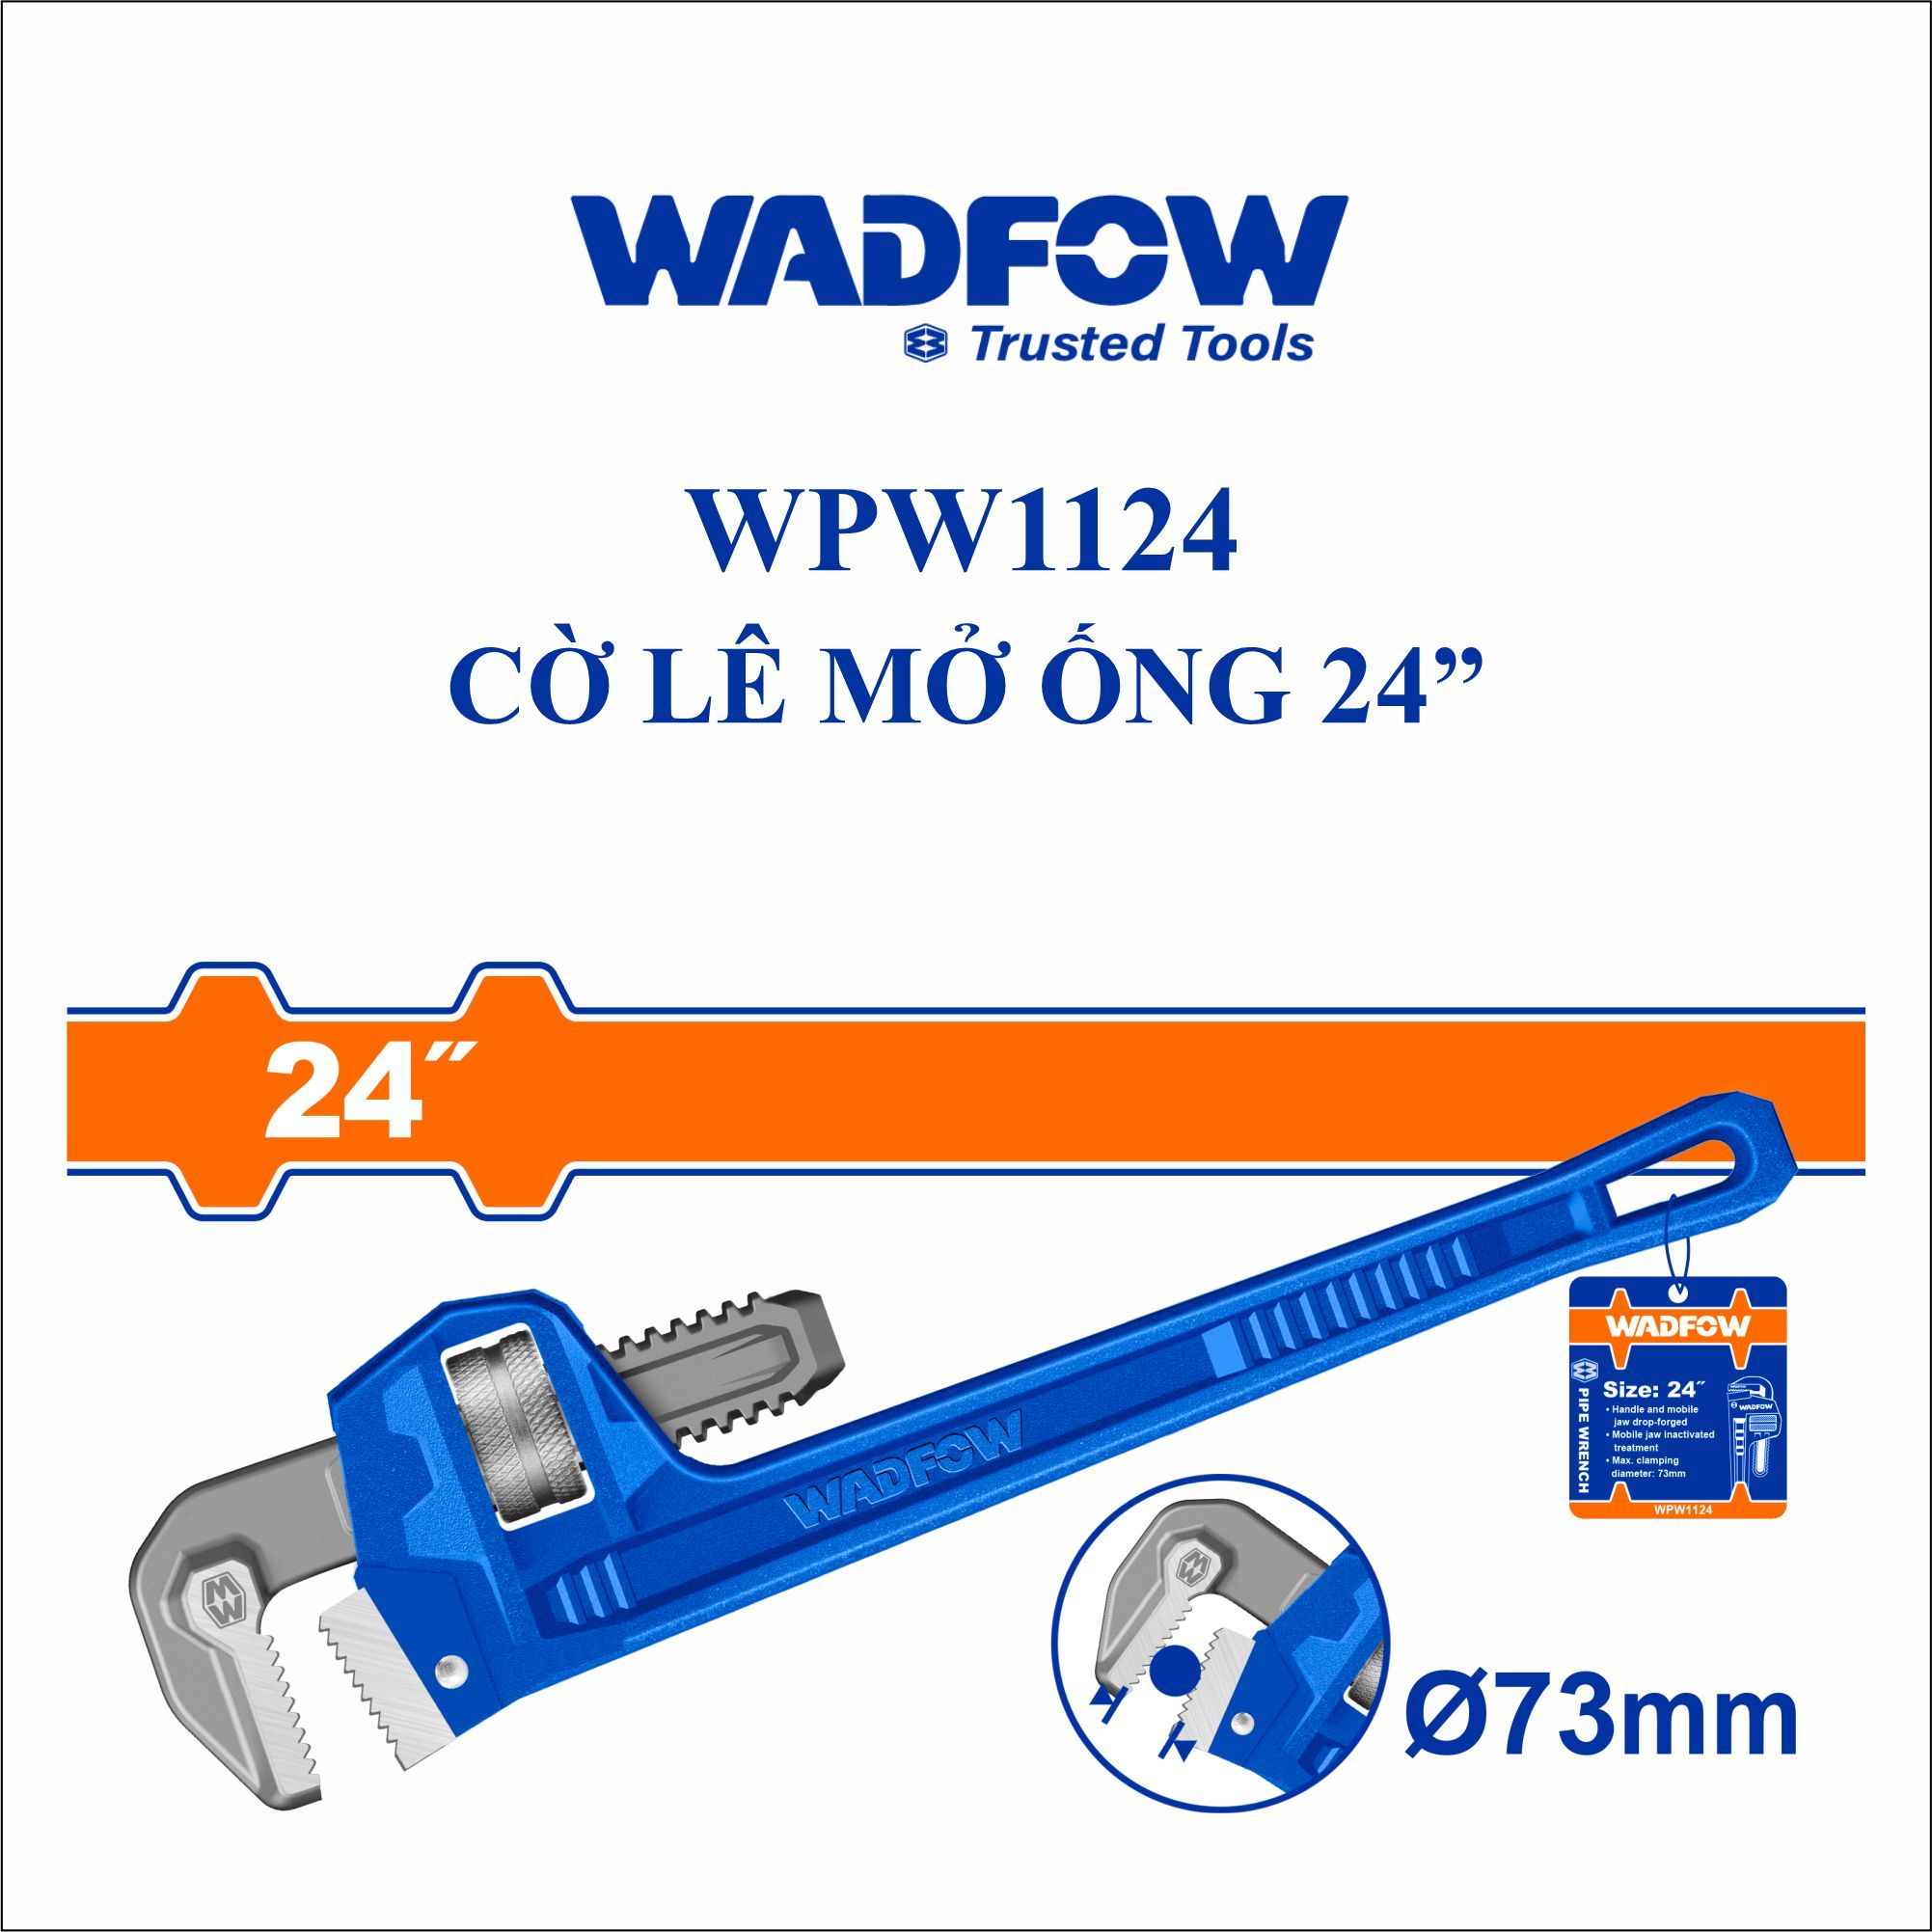  Cờ lê mở ống 24 Inch WADFOW WPW1124 